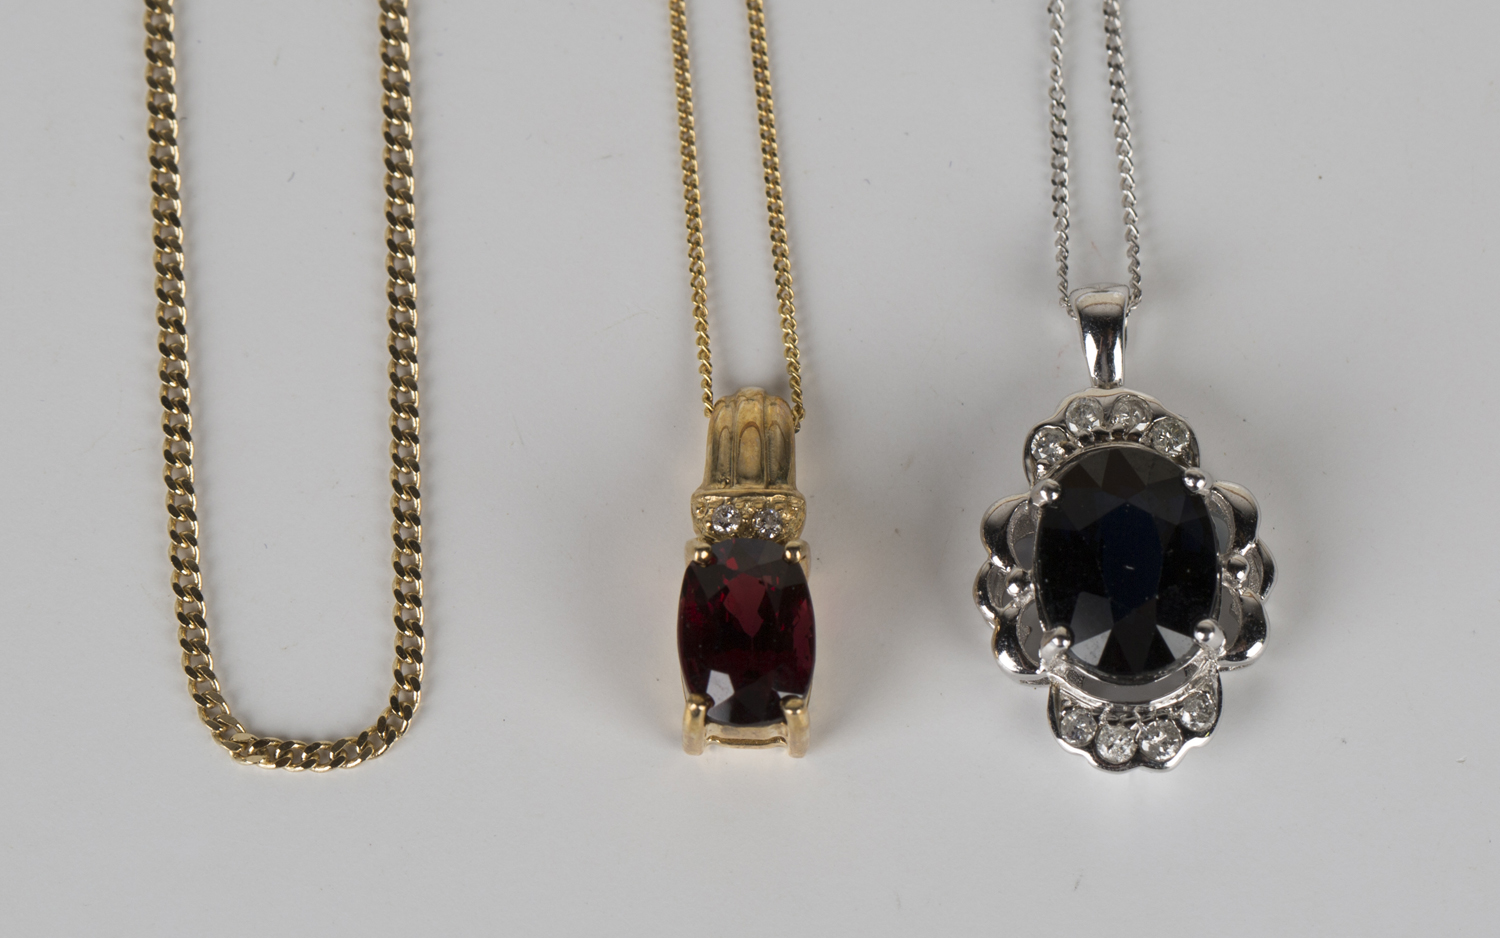 A 9ct gold, garnet and diamond pendant, length 1.7cm, with a 9ct gold neckchain, length 44.5cm, a